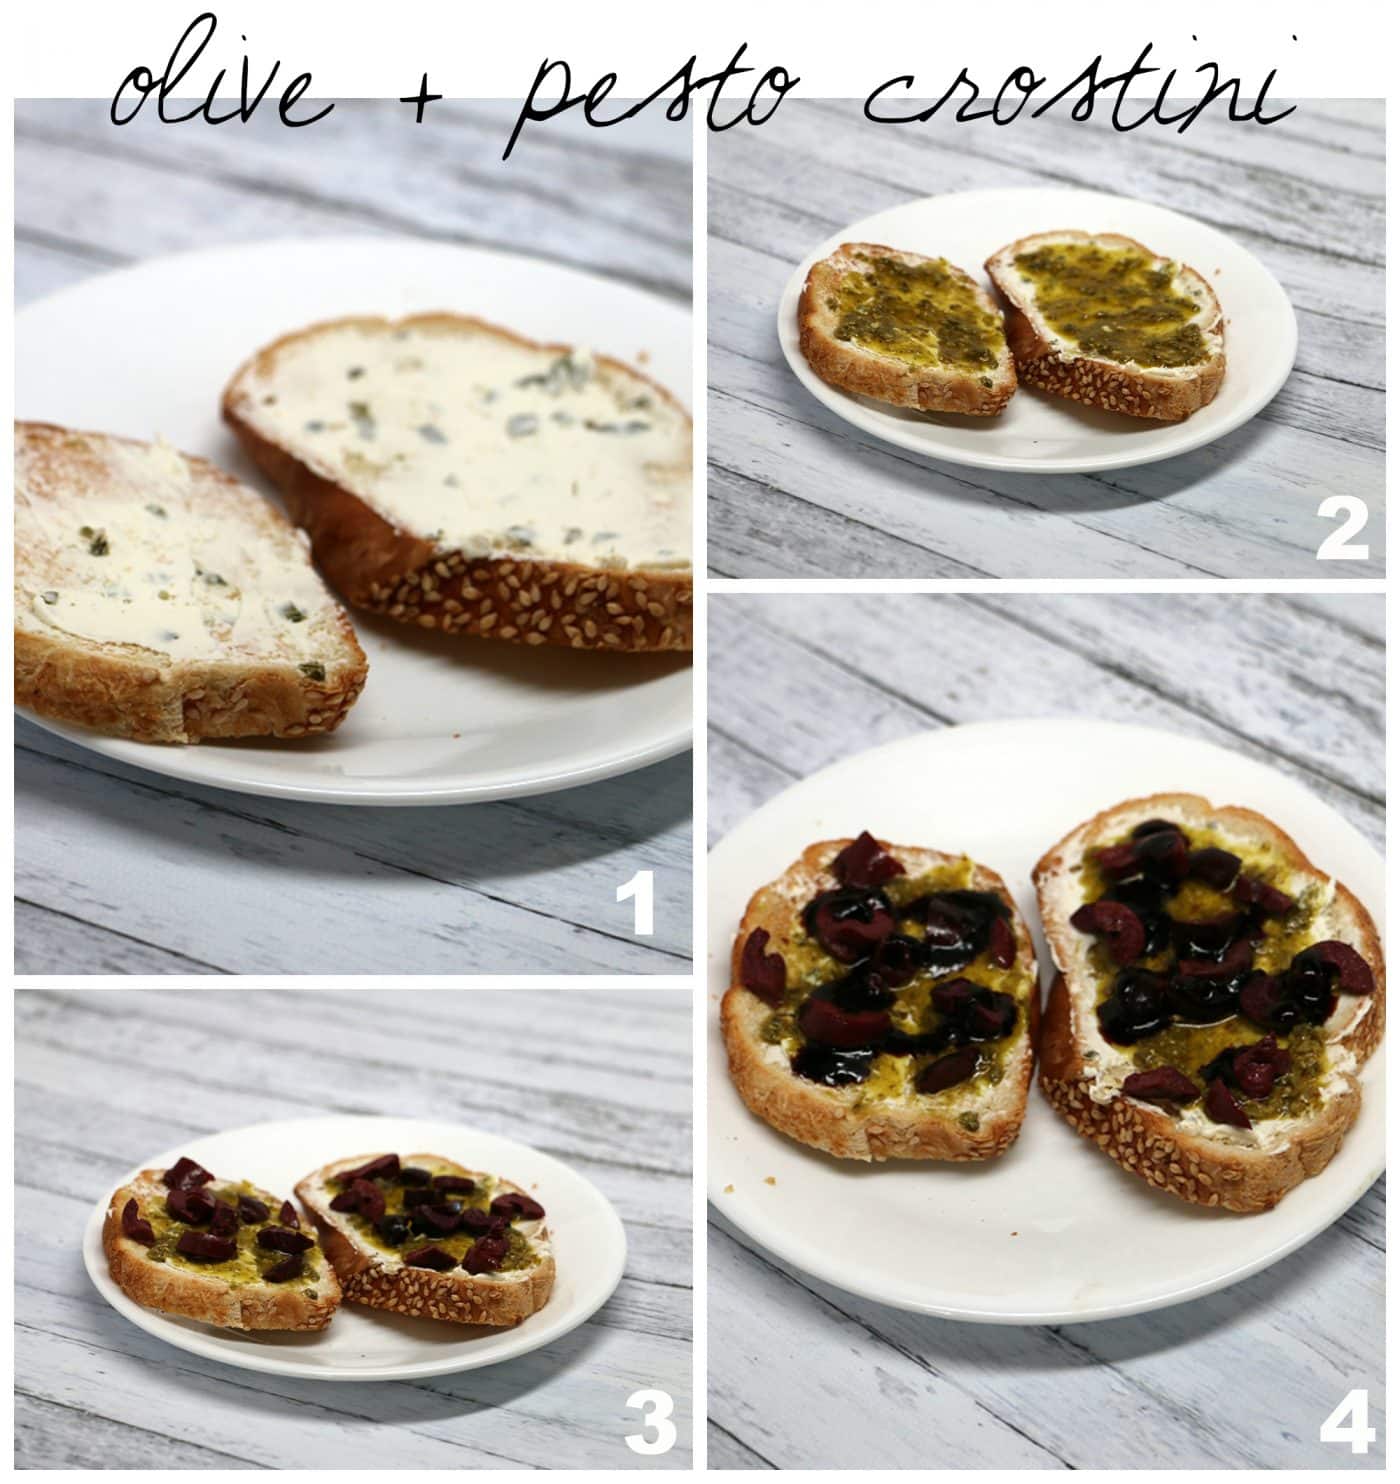 Olive and Pesto Crostini Step by Step Recipe